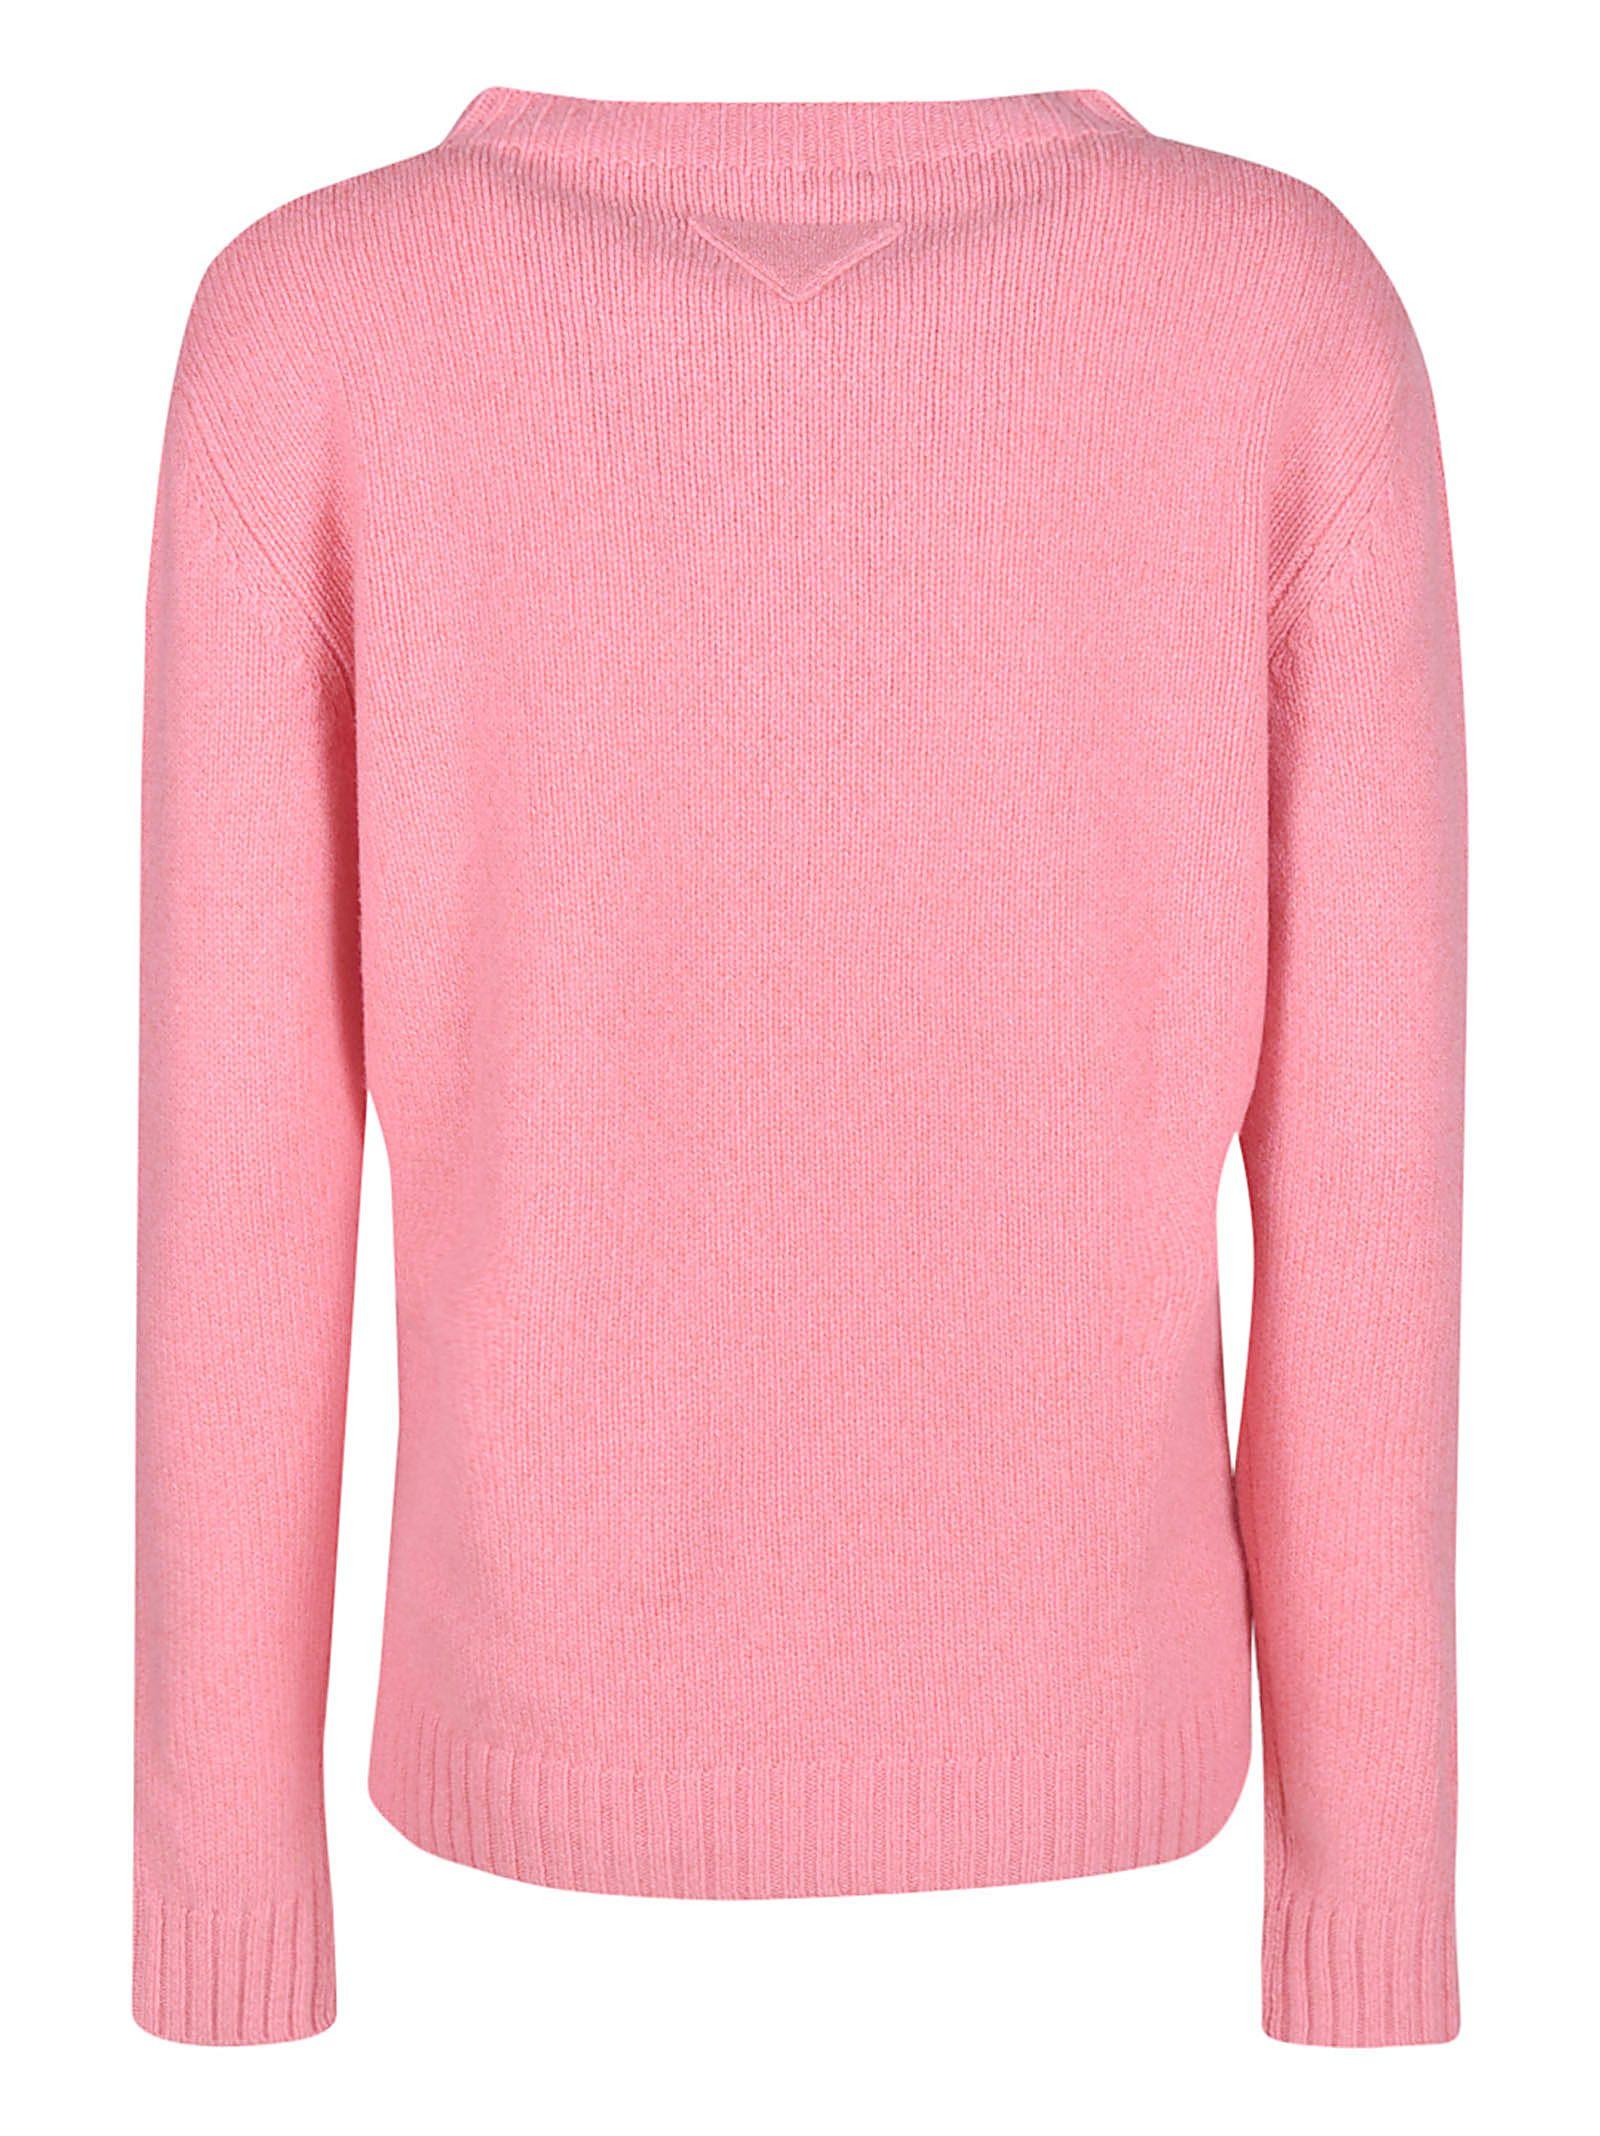 Prada Wool Sweater in Pink - Lyst